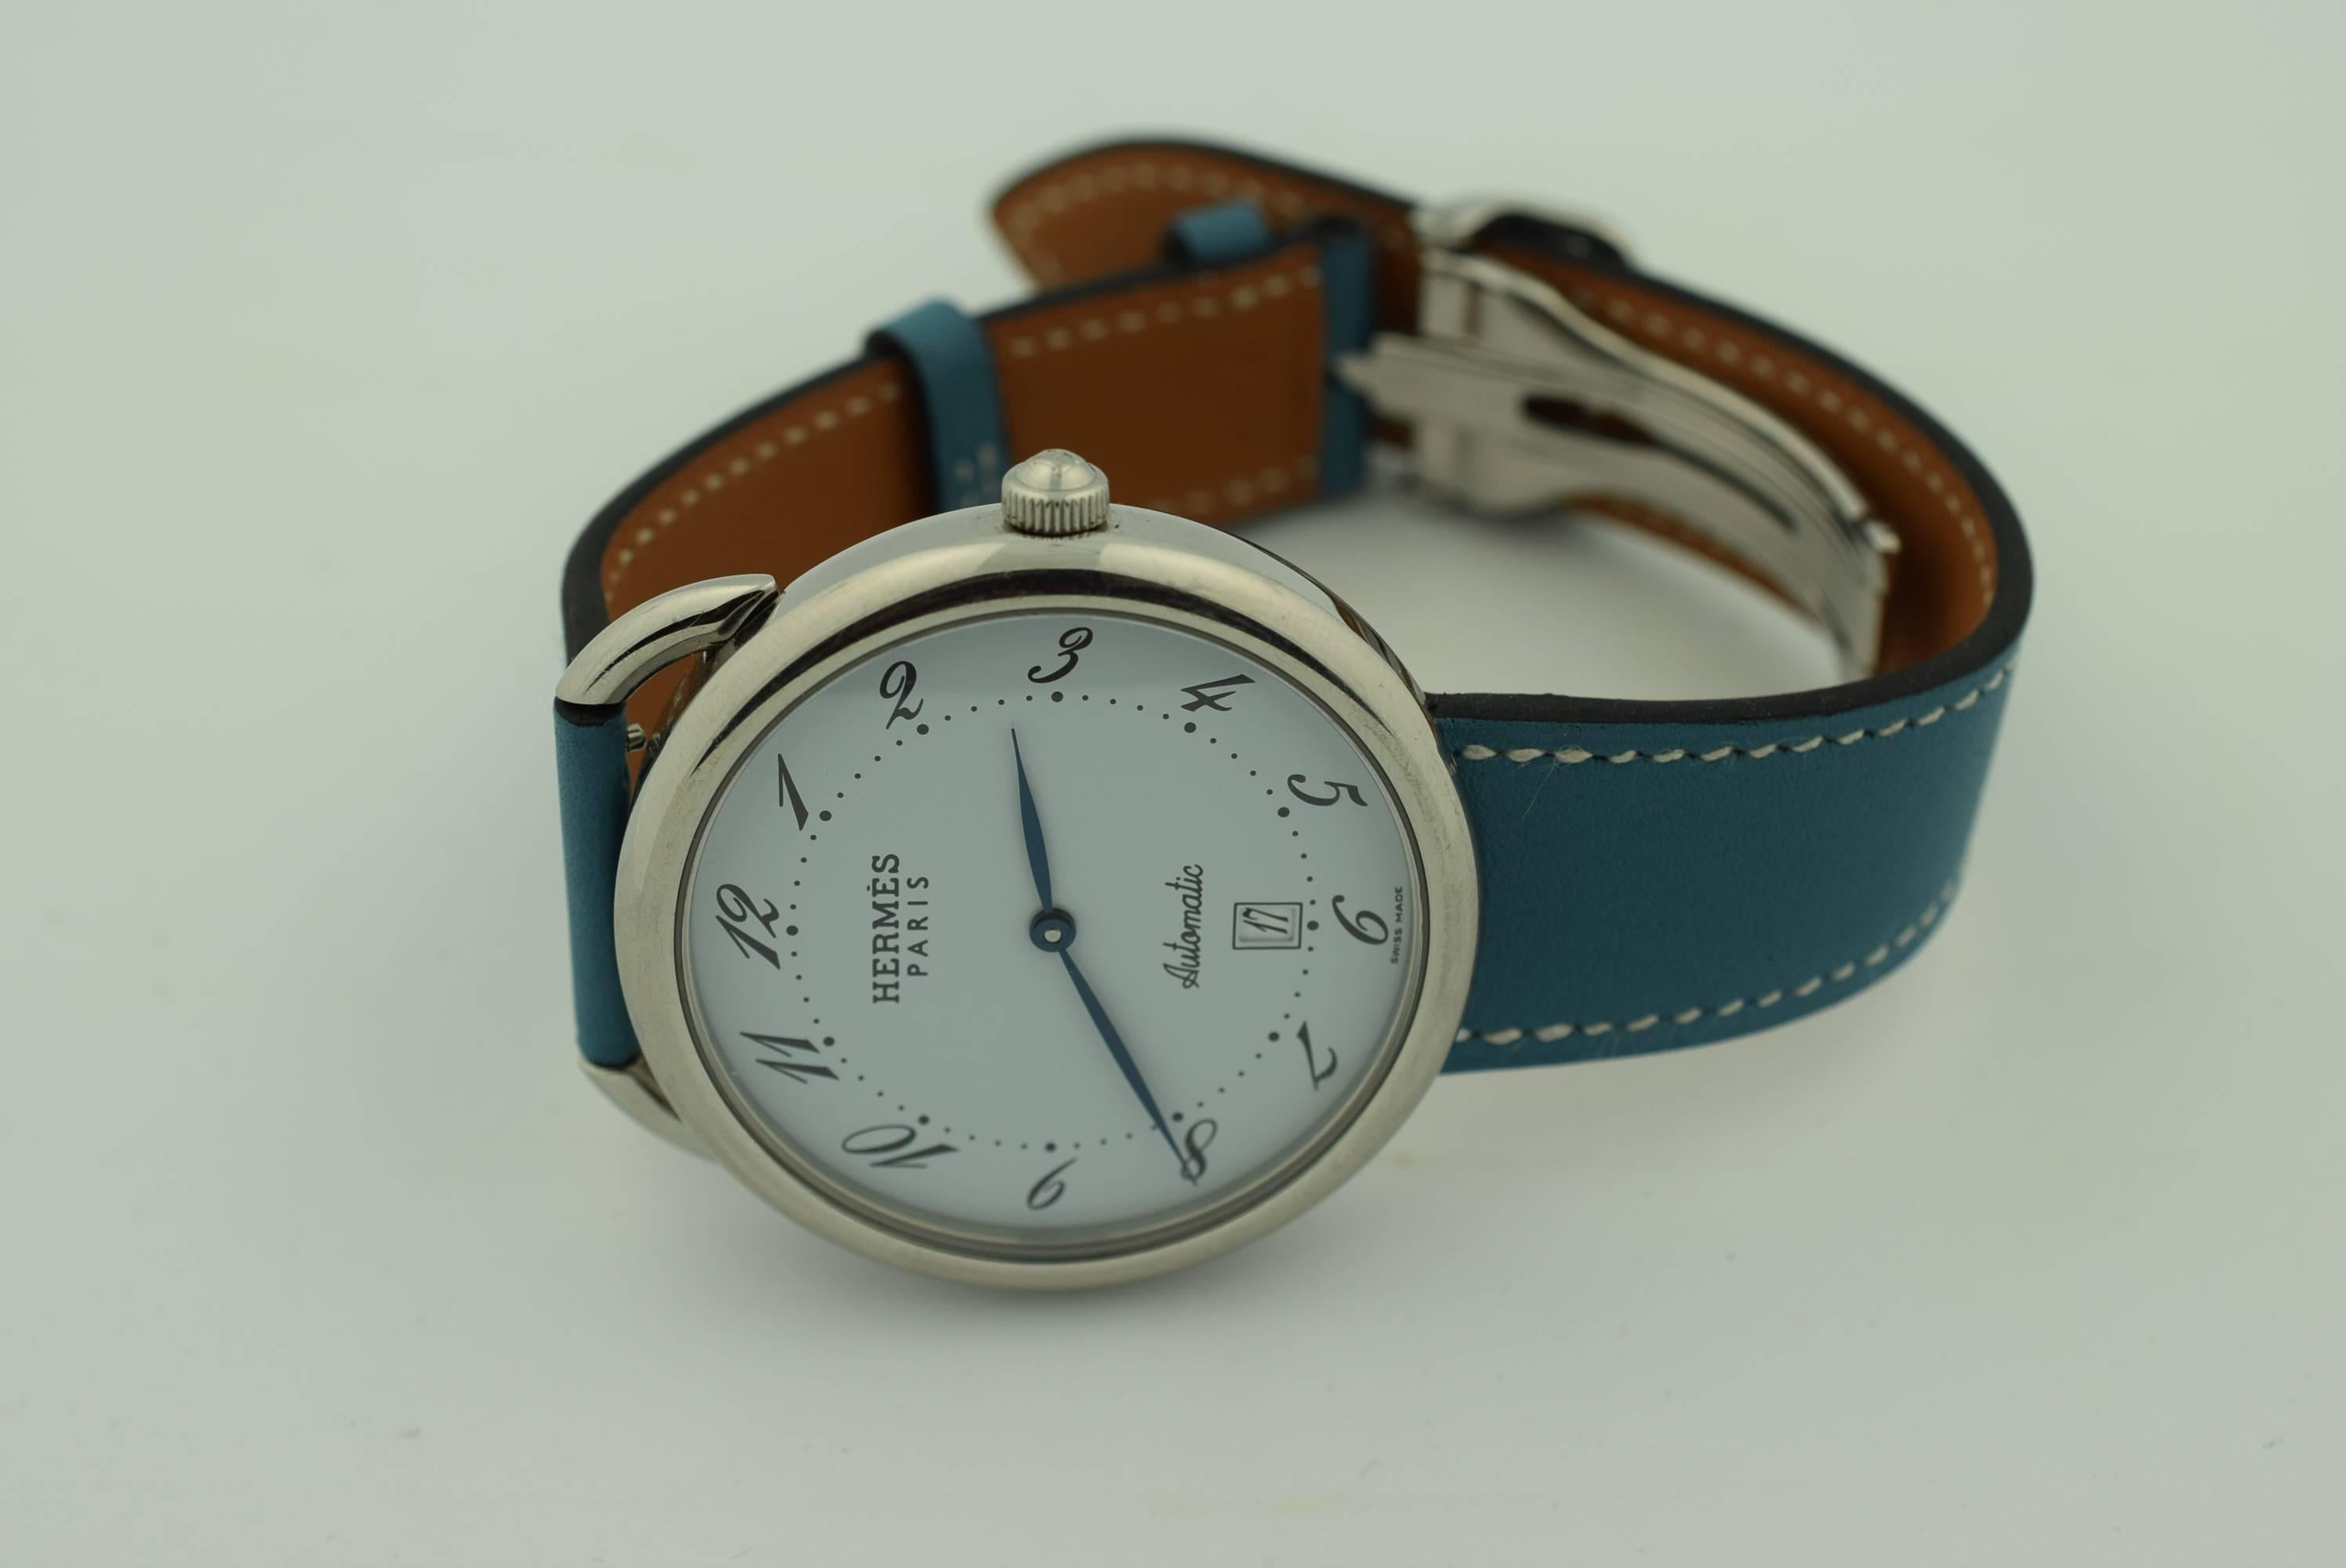 Hermes Stainless Steel Arceau Wristwatch Ref AR4.810 2